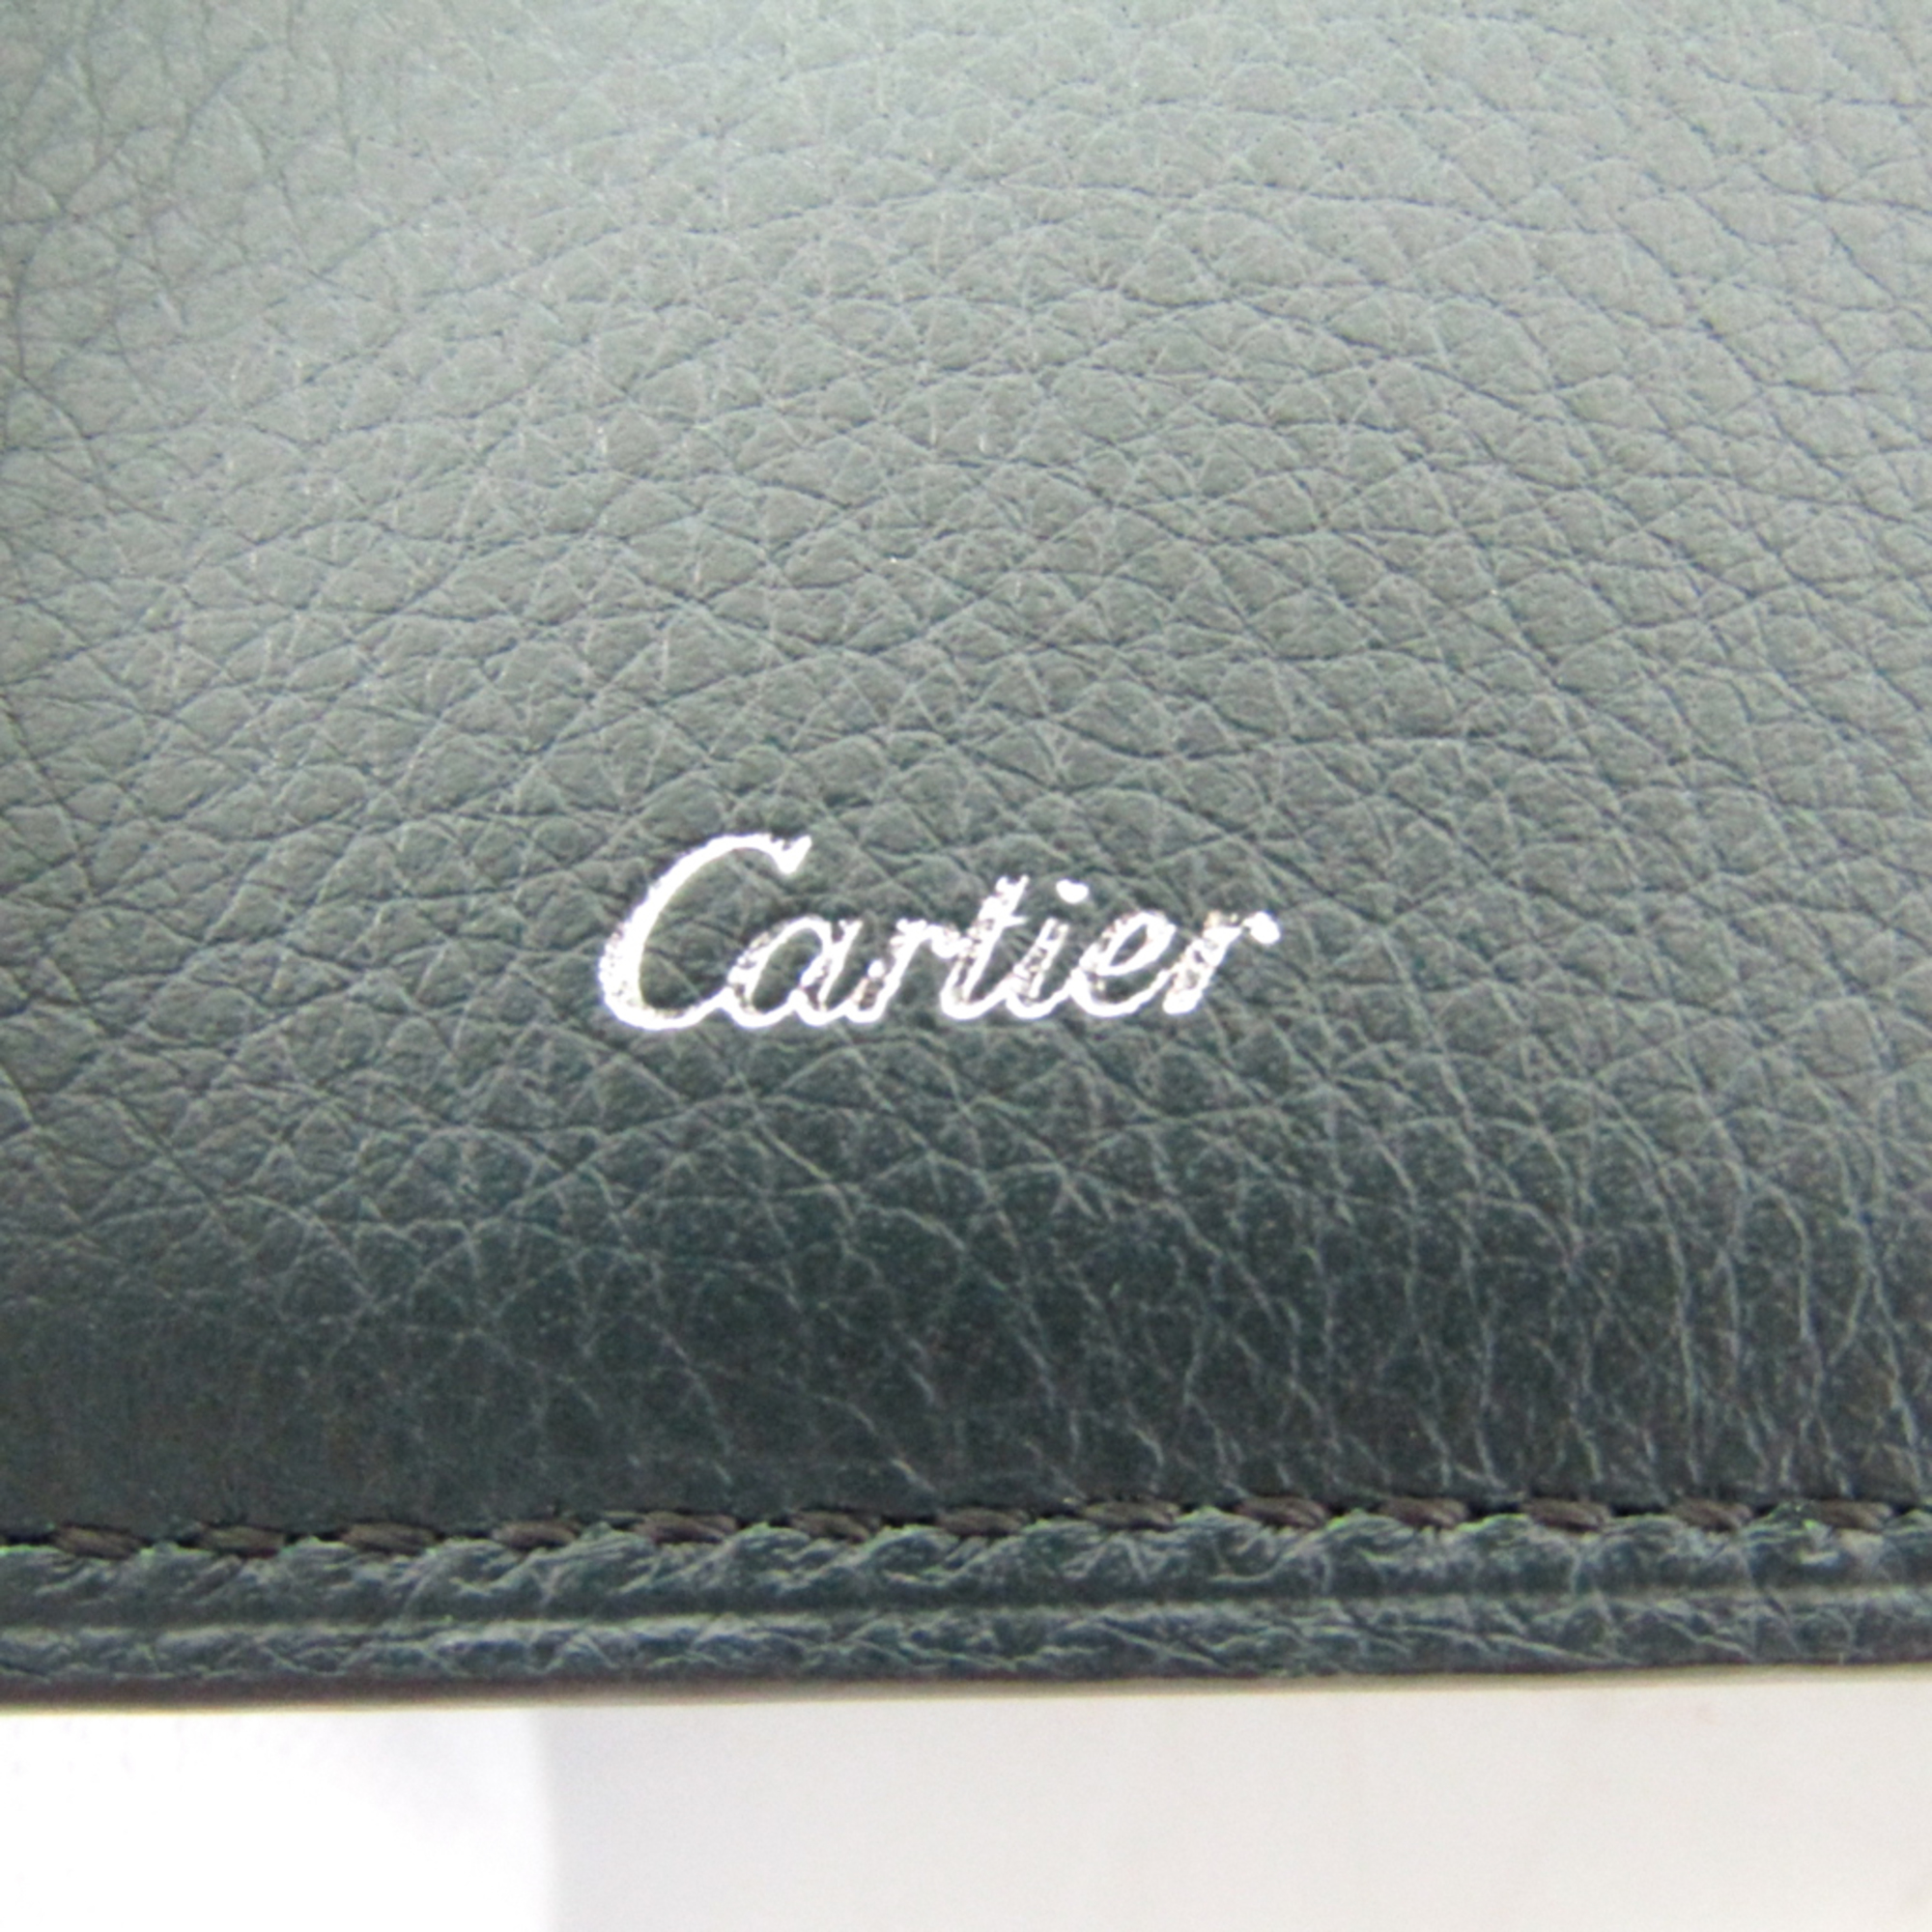 Cartier Leather Passport Cover Dark Green